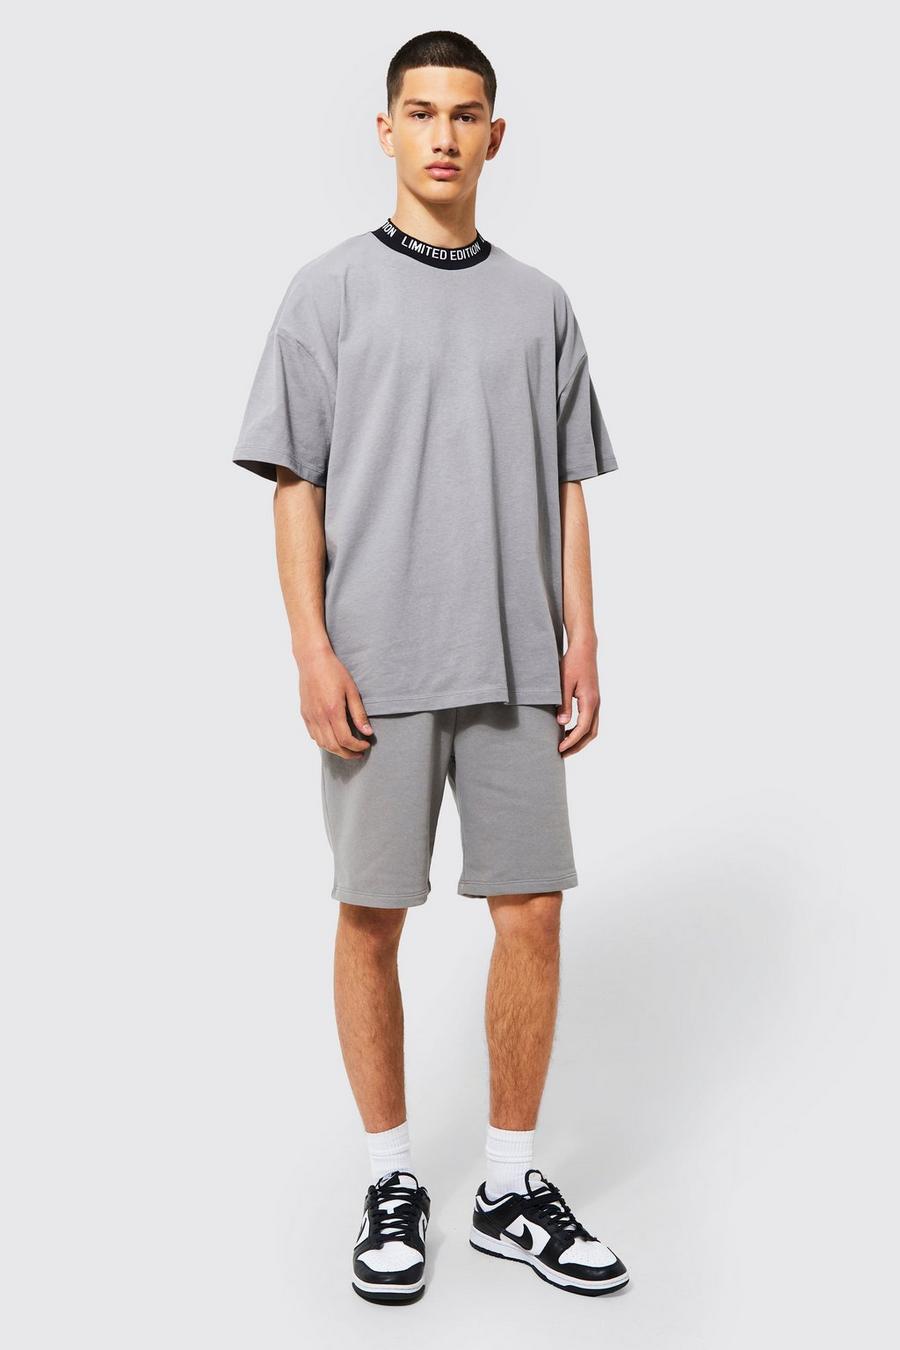 Charcoal grey Oversized Official Man Rib Tshirt & Short Set